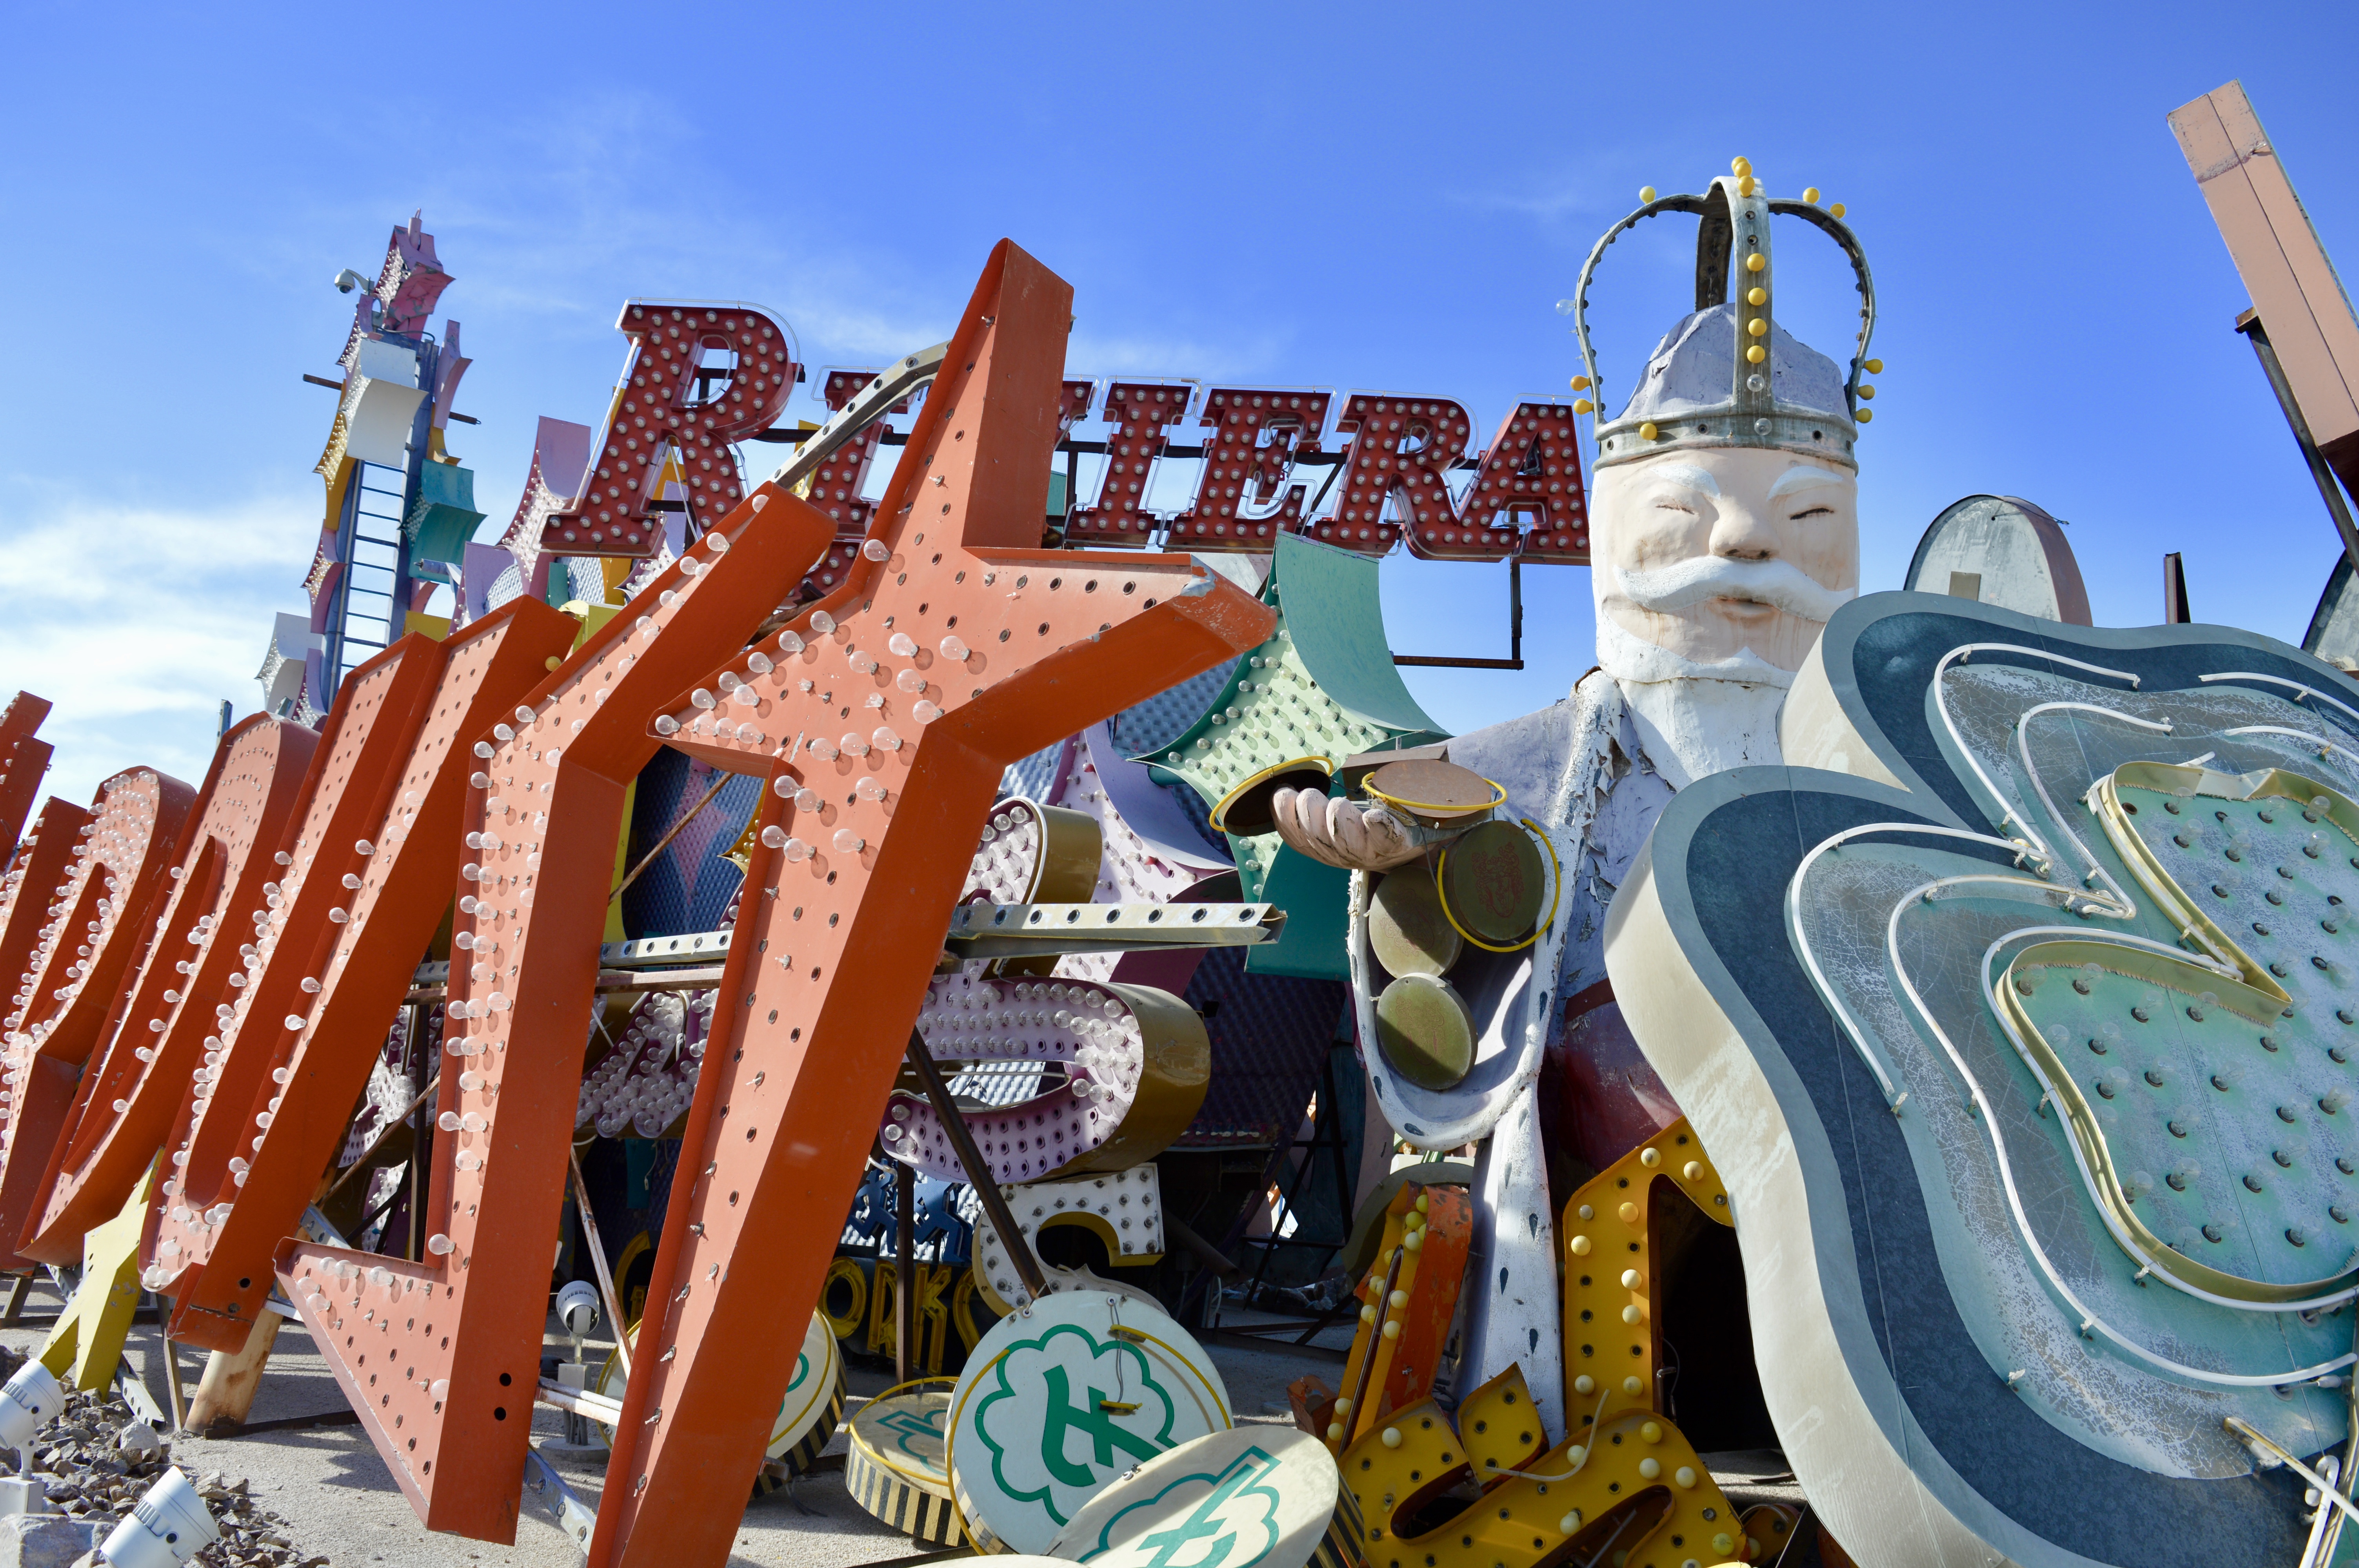 The Riviera | The Neon Boneyard Museum | Las Vegas | What should I do in Las Vegas? | Travel tips for Las Vegas Nevada | Travel Blog | Elle Blonde Luxury Lifestyle Destination Blog